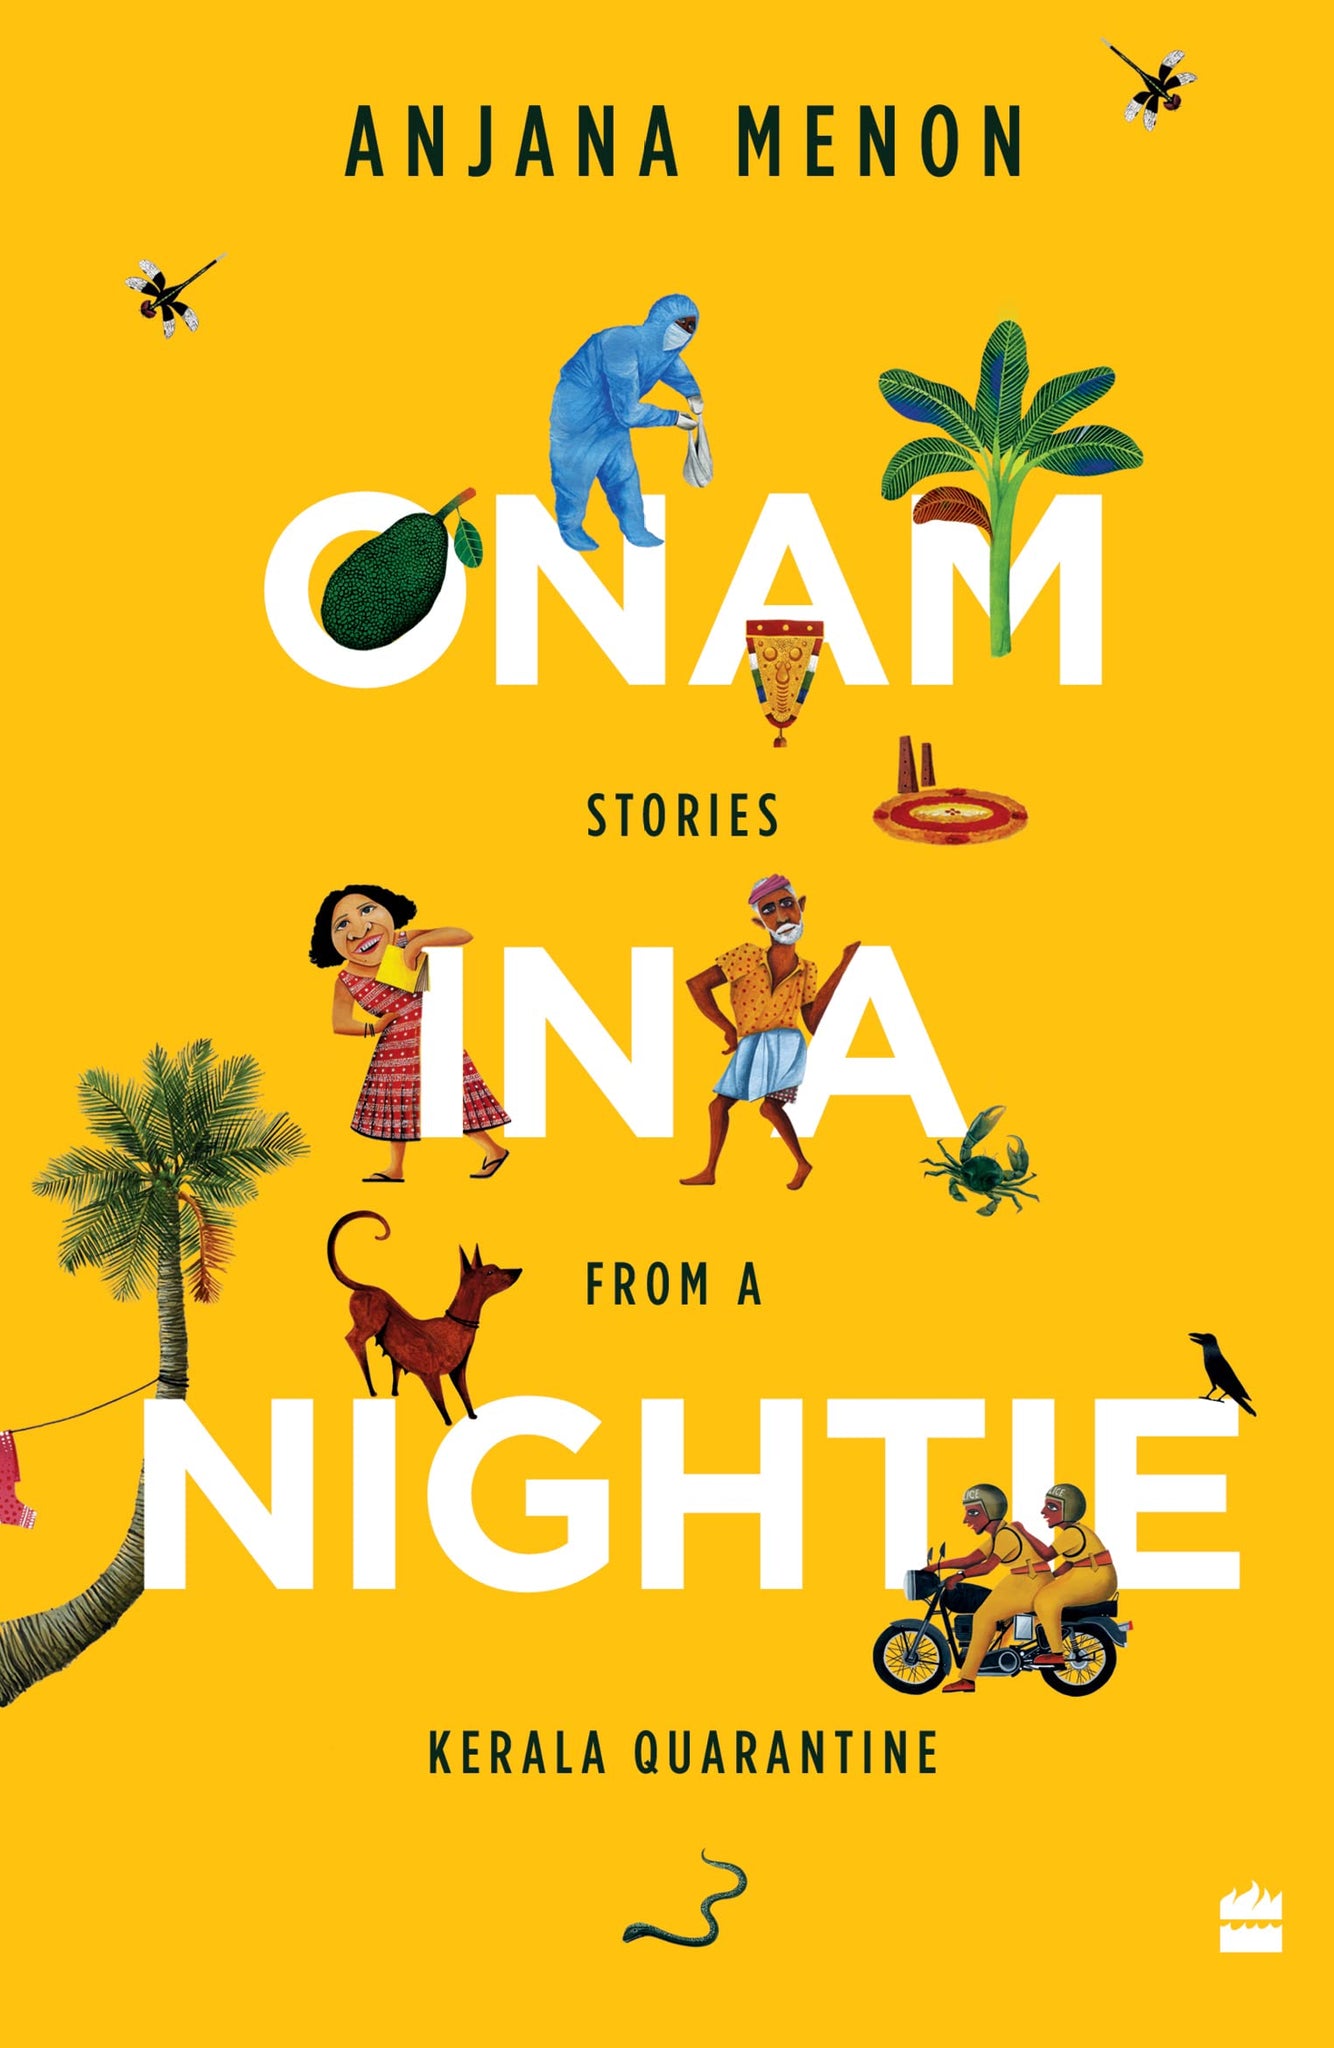 Onam In A Nightie: Stories From A Kerala Quarantine